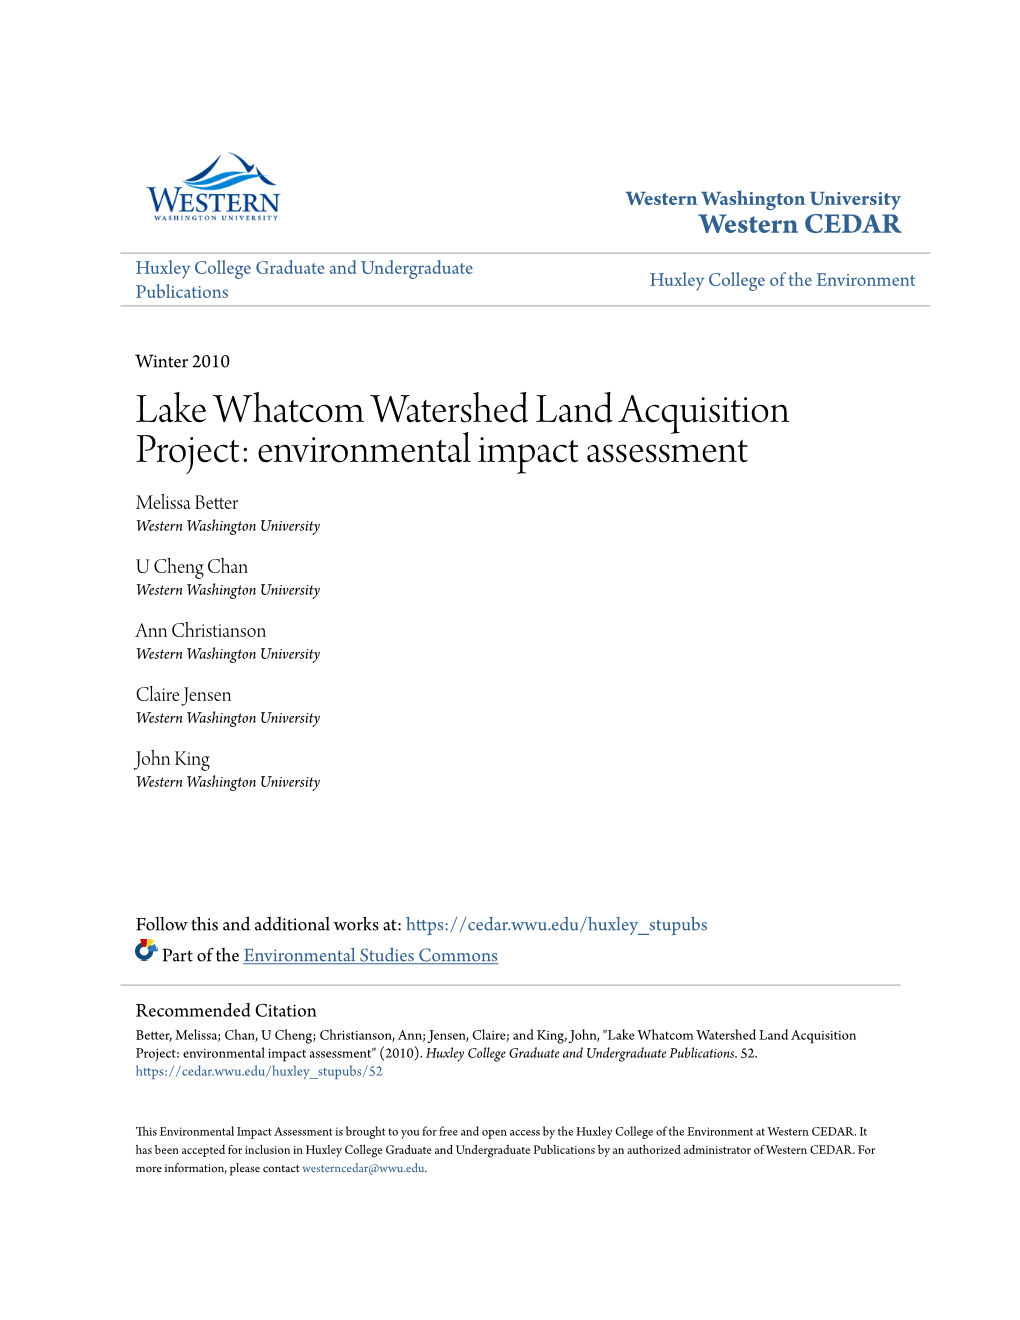 Lake Whatcom Watershed Land Acquisition Project: Environmental Impact Assessment Melissa Better Western Washington University